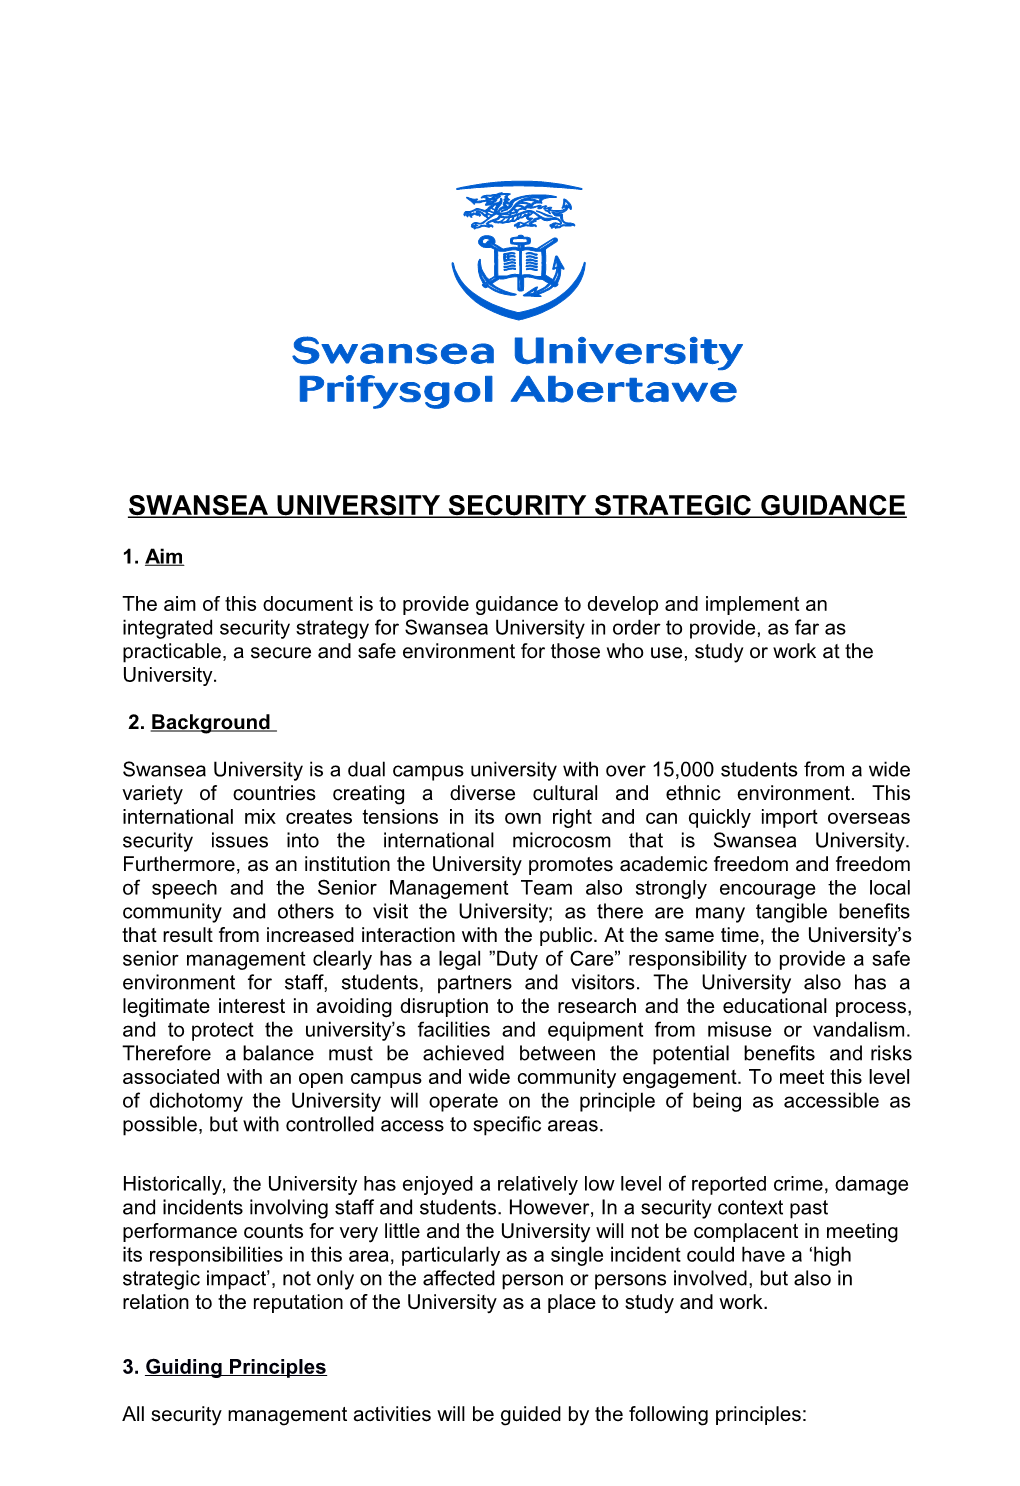 Swansea University Security Strategic Guidance